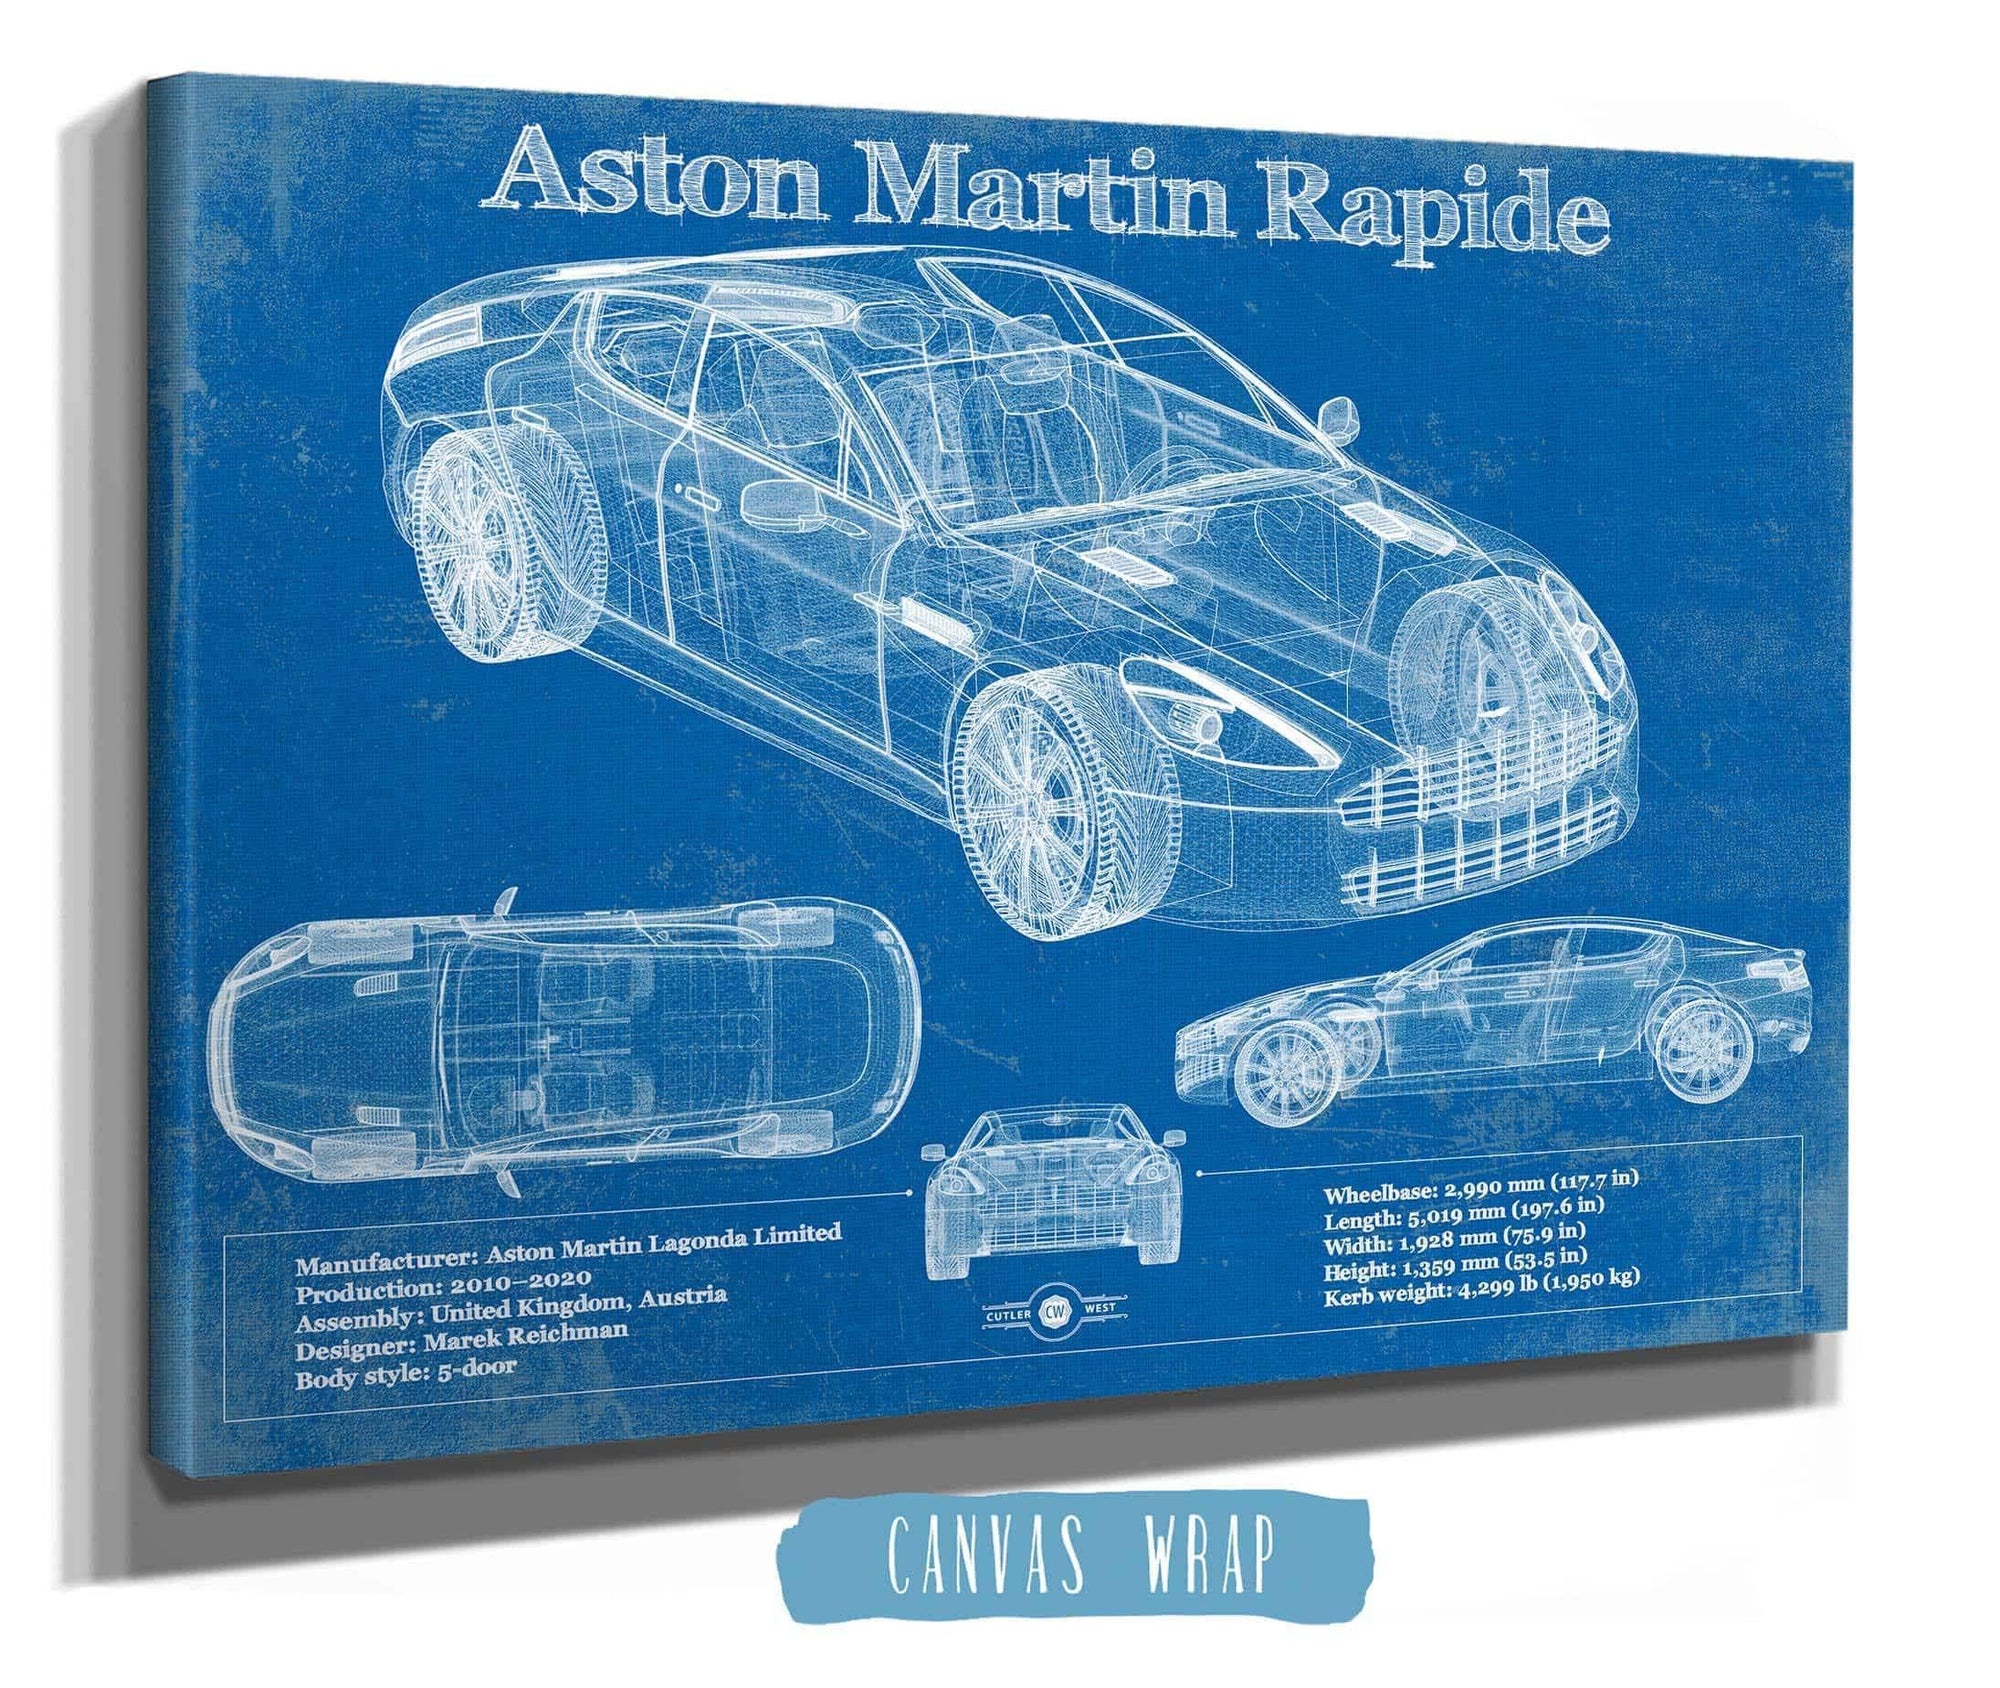 Cutler West Vehicle Collection 2011 Aston Martin Rapide Vintage Blueprint Auto Print